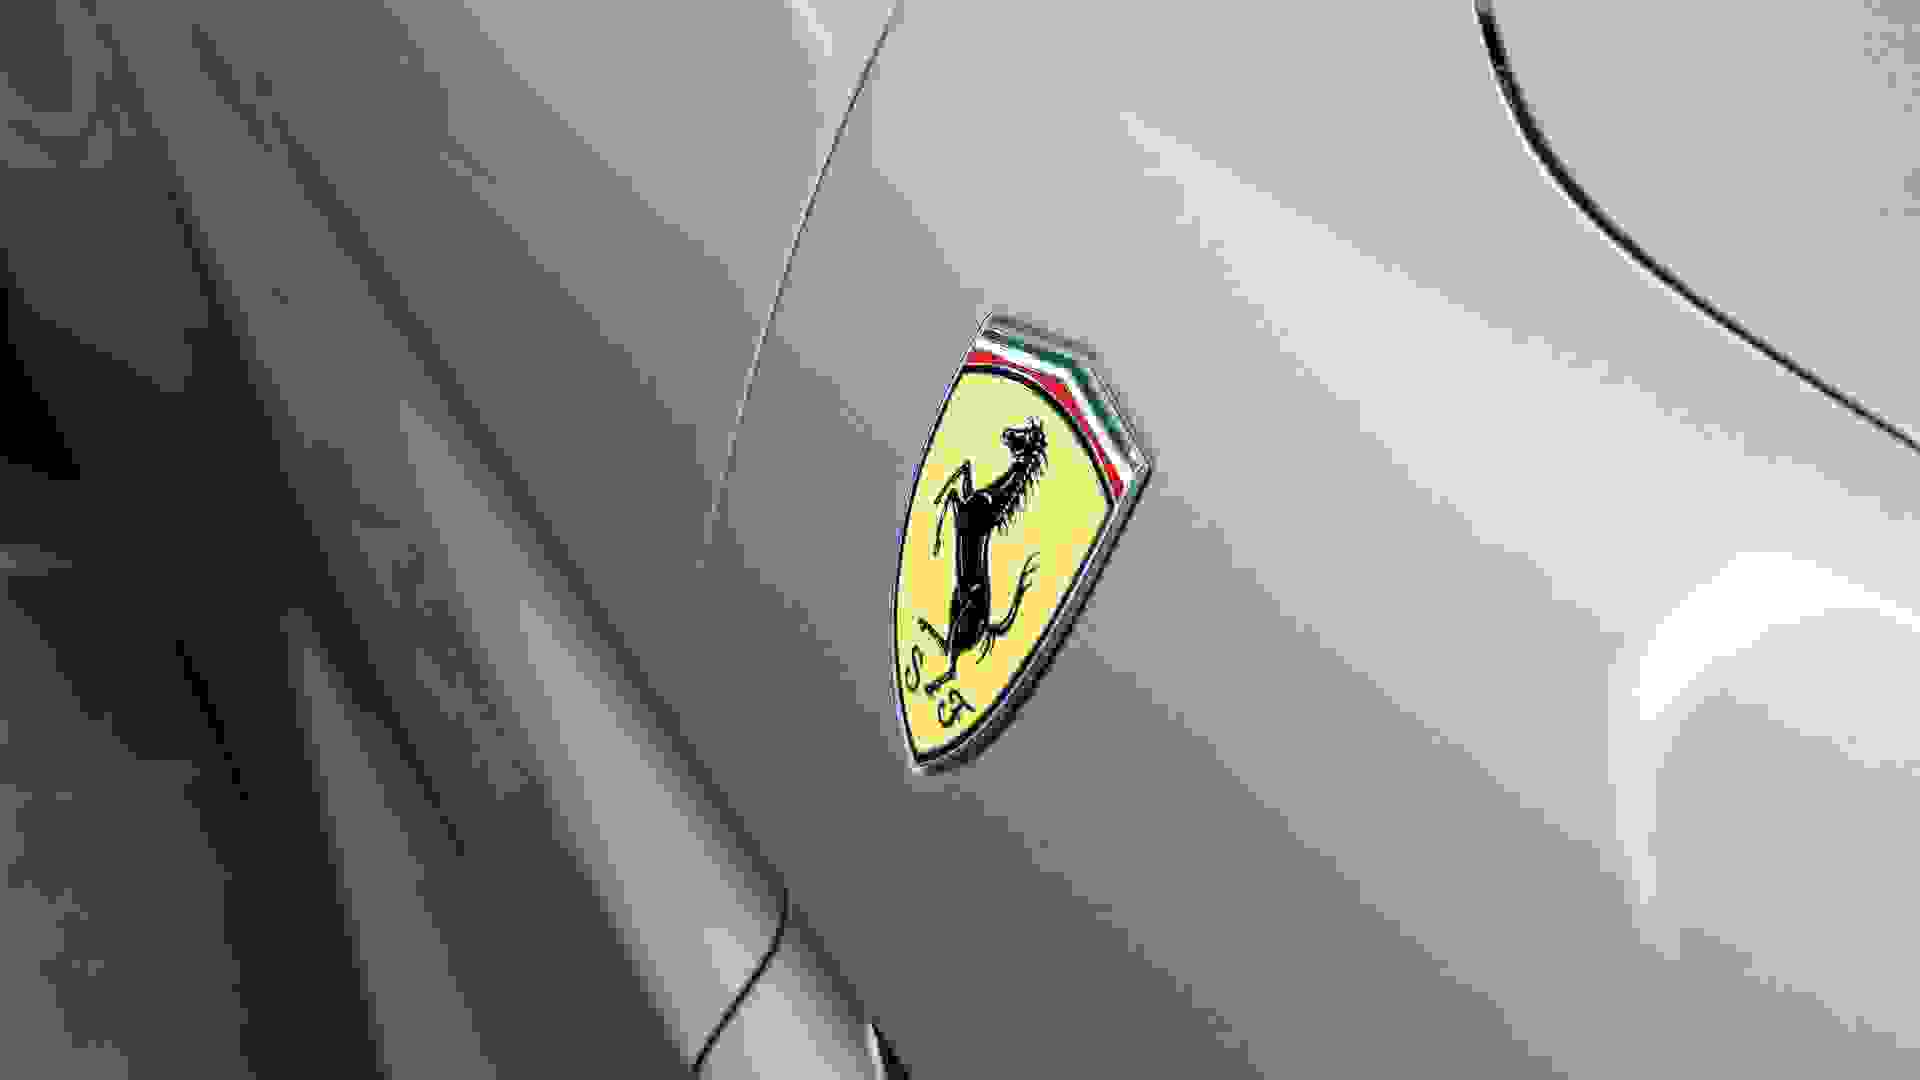 Ferrari Portifino Photo 6d9312f8-aac5-442d-96fa-1ac332d614c9.jpg